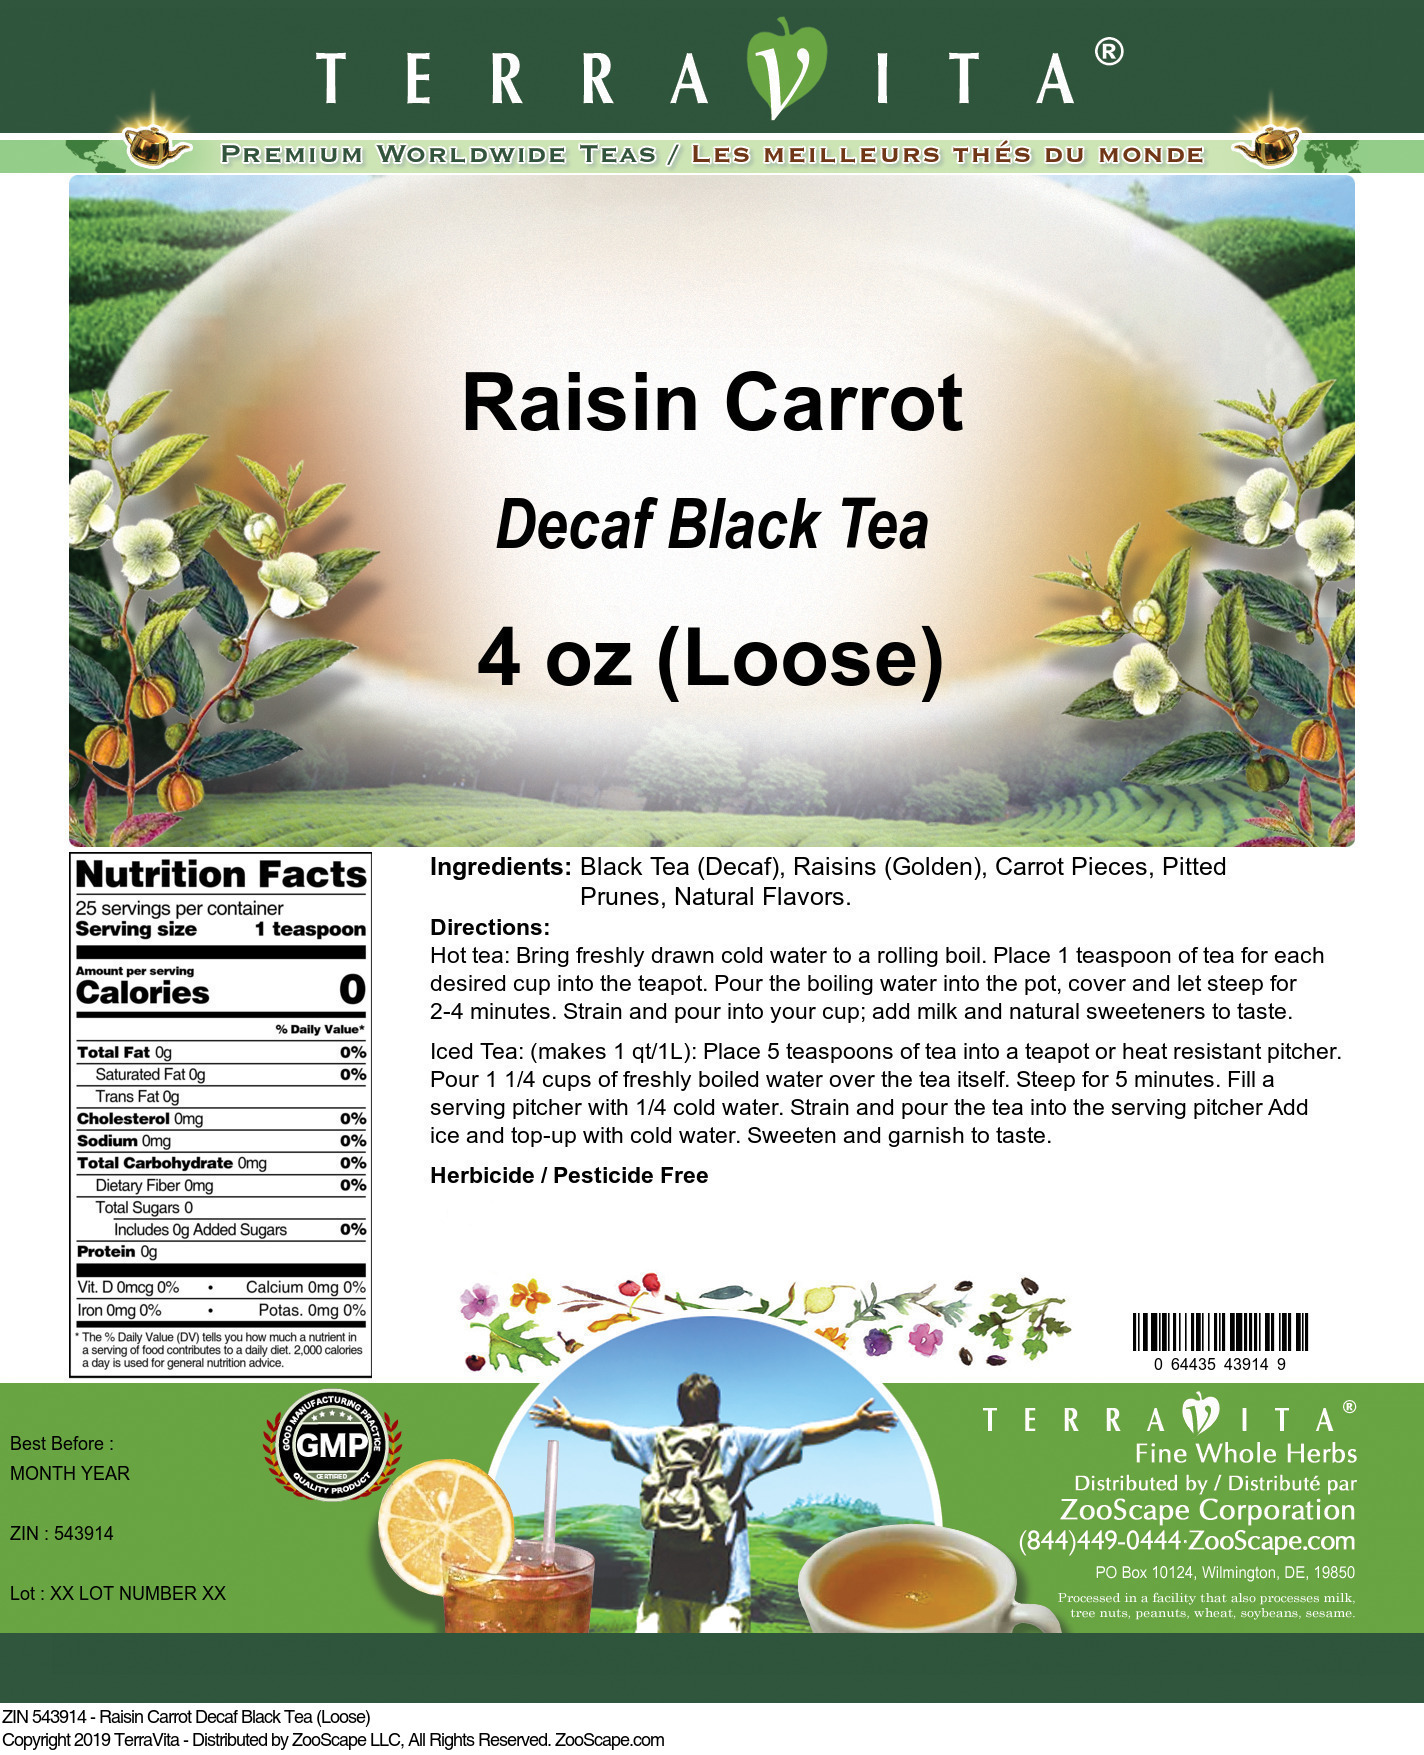 Raisin Carrot Decaf Black Tea (Loose) - Label